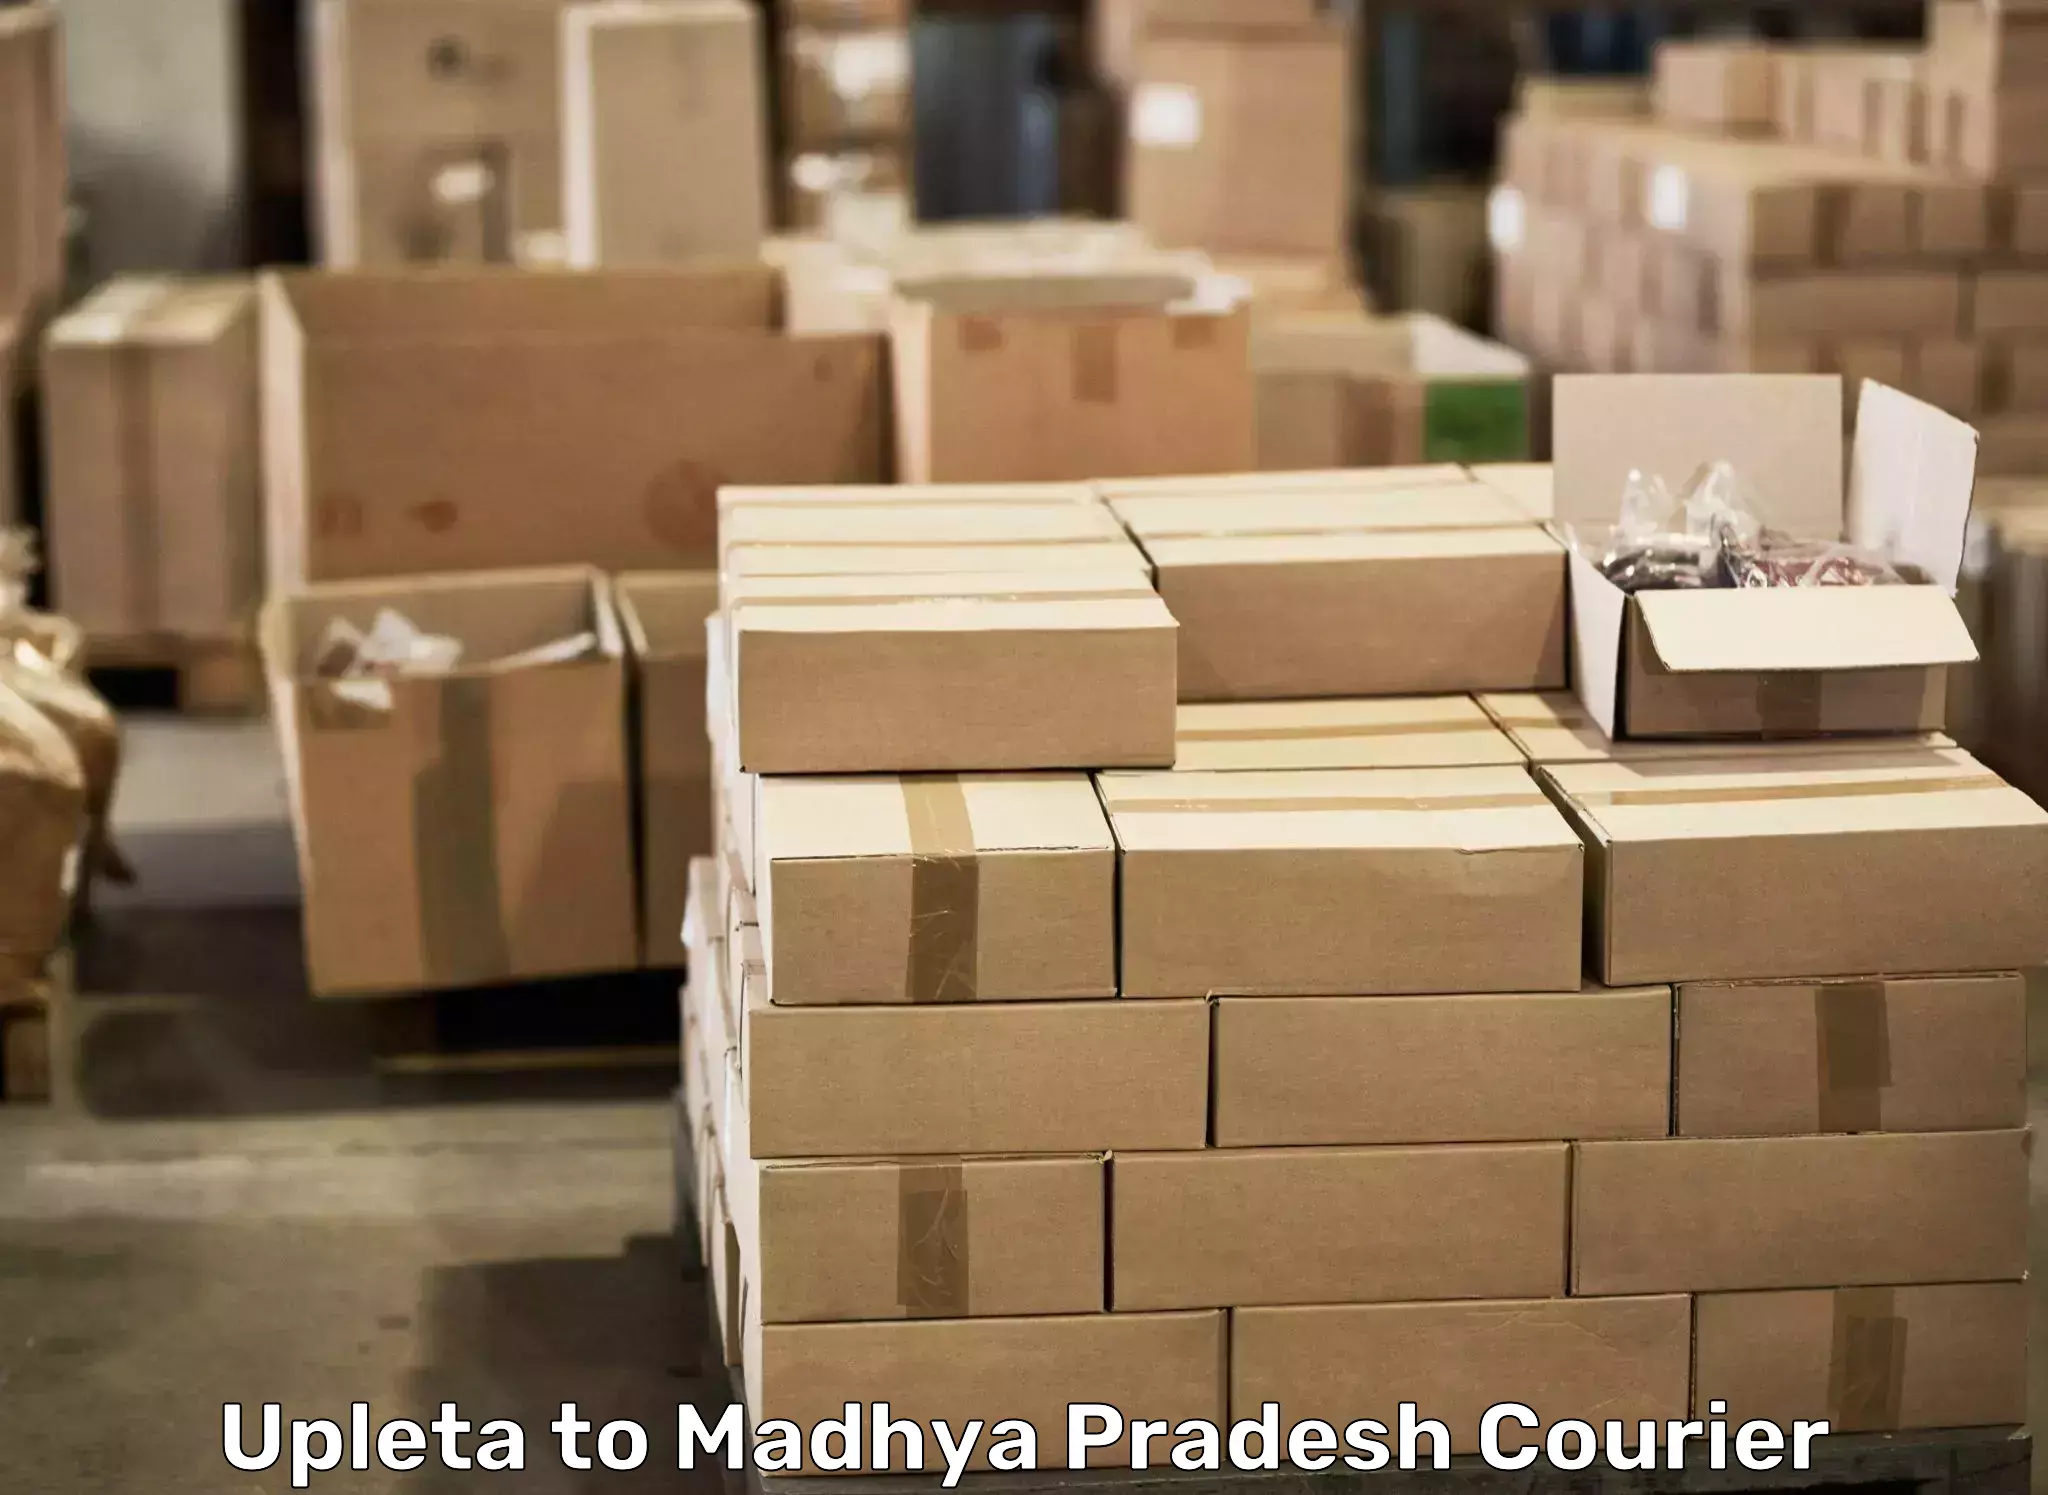 Home goods moving company Upleta to Raipur Karchuliyan